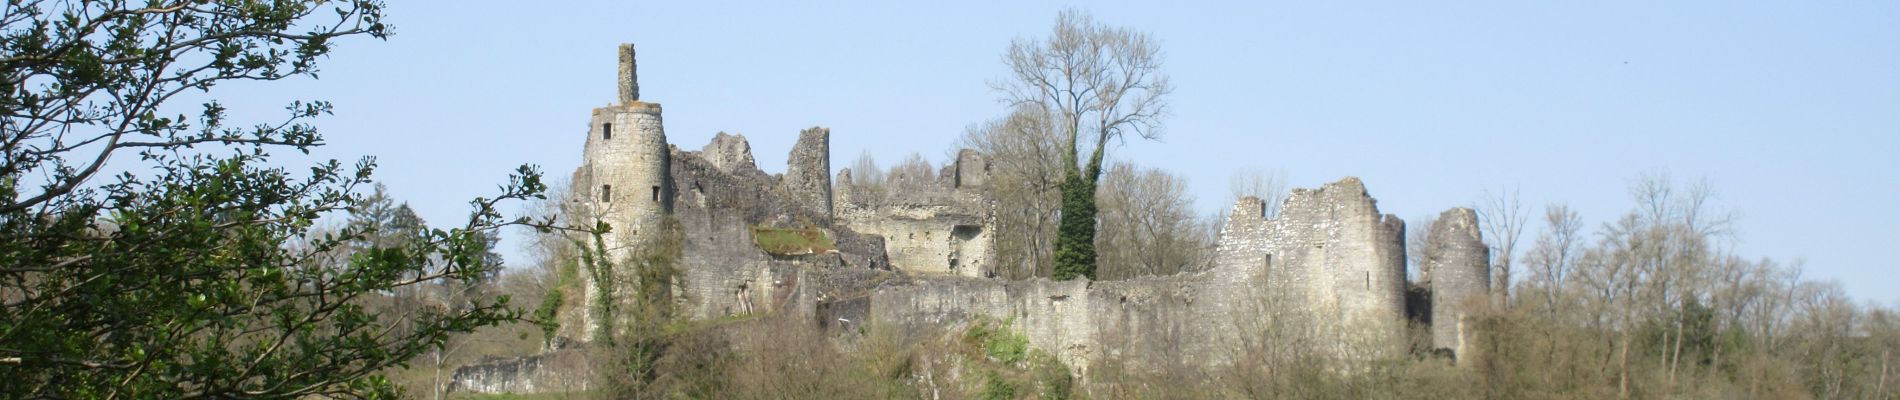 POI Anhée - RB-Na-C2 Château de Montaigle - Photo